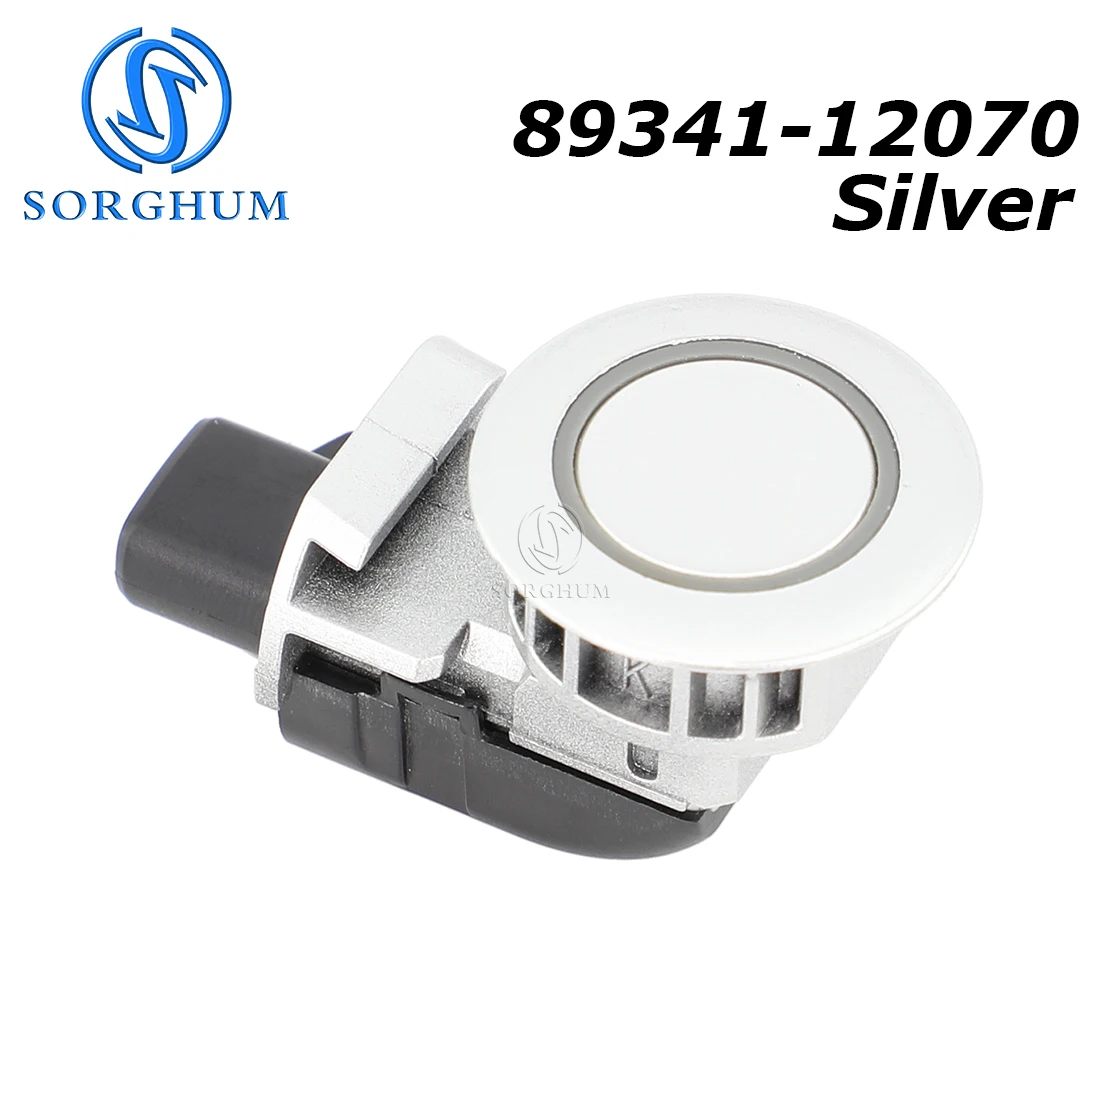 

SORGHUM 89341-12070 PDC Parking Bumper Sensor For Toyota Corolla Camry FJ Land Cruiser For Lexus LS430 89341-12050 89341-50040